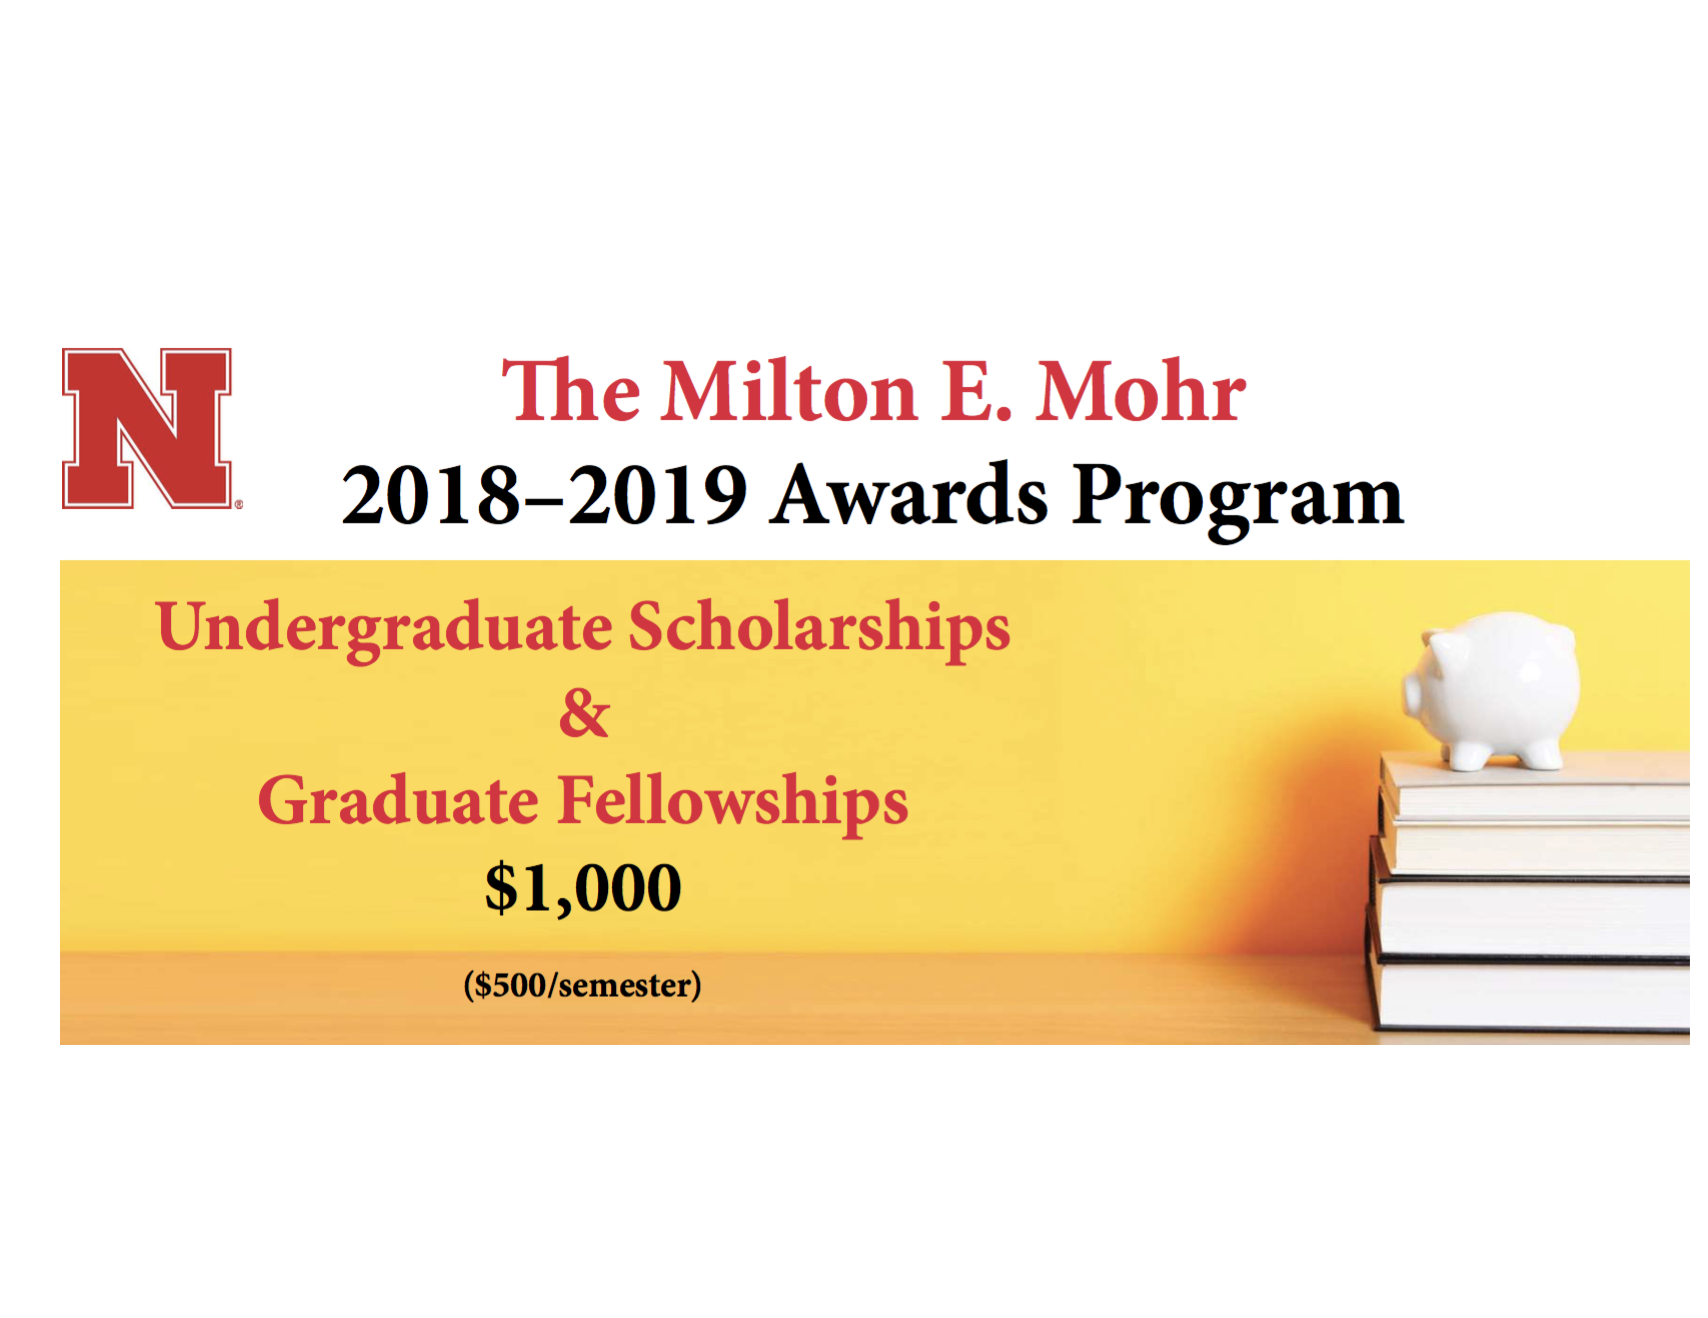 The Milton E. Mohr 2018-2019 Awards Program